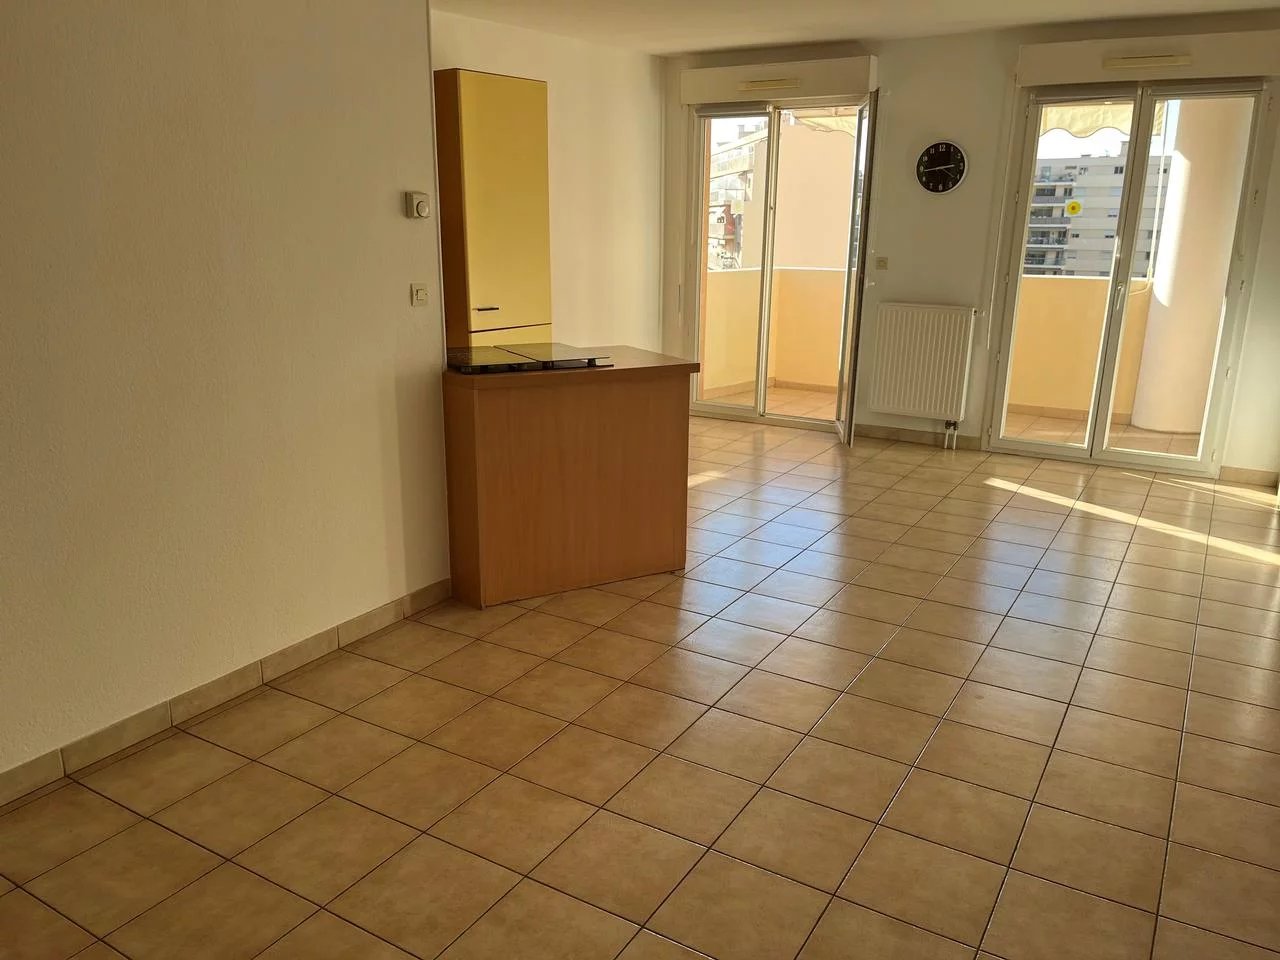 Appartement  3 Locali 62m2  In vendita   245 000 €